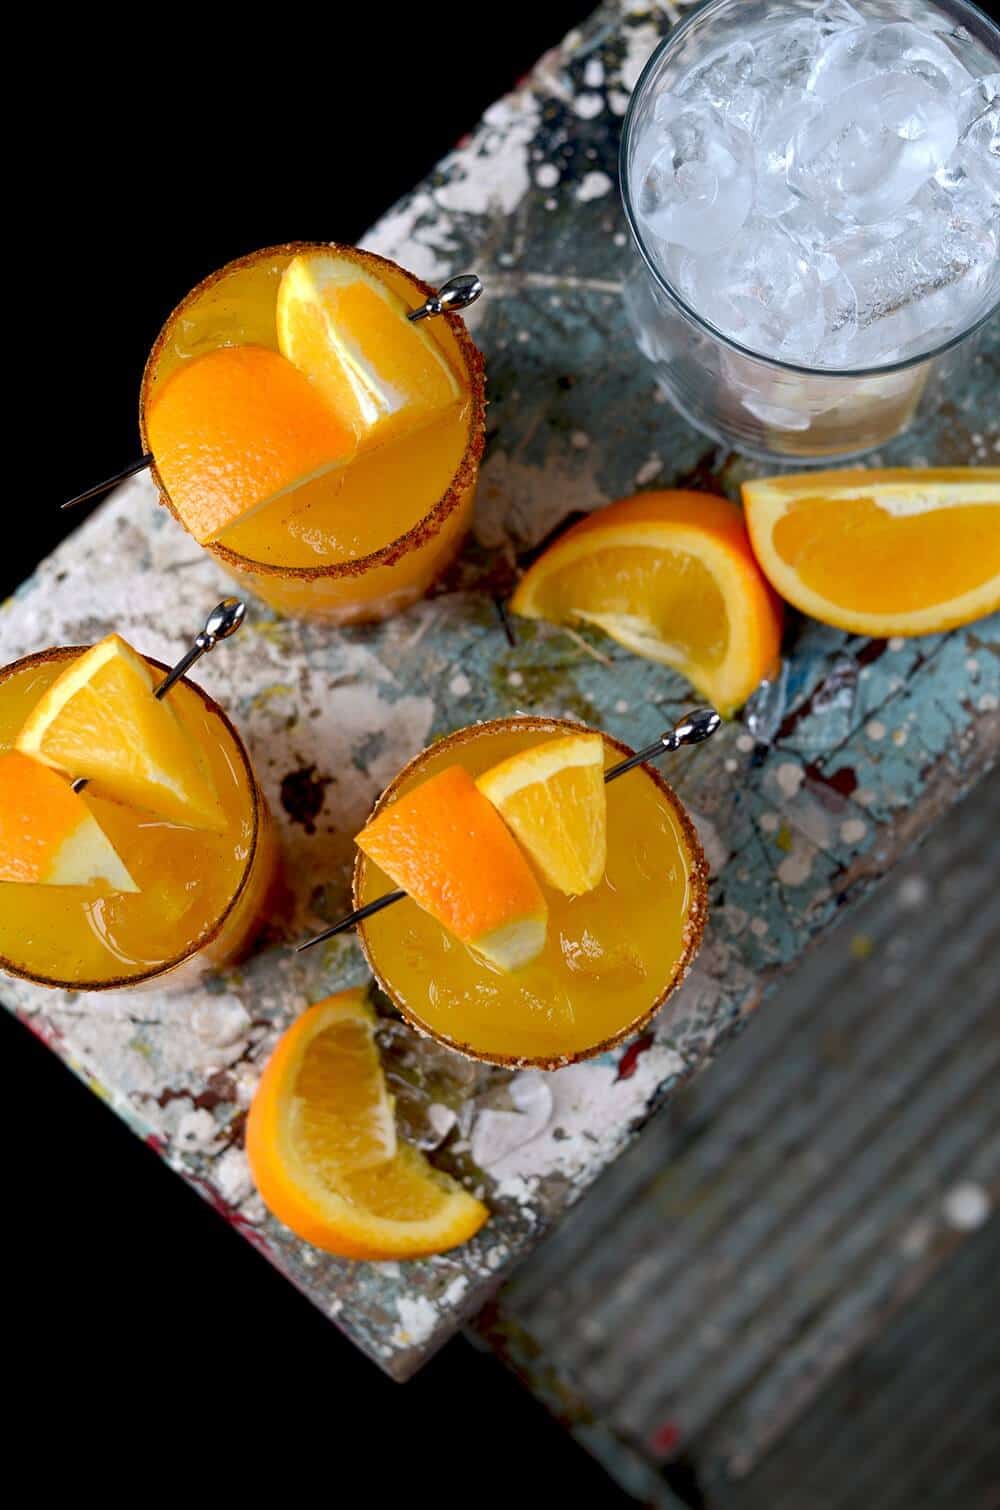 Orange-Turmeric-Margaritas in three glasses with oranges on the side